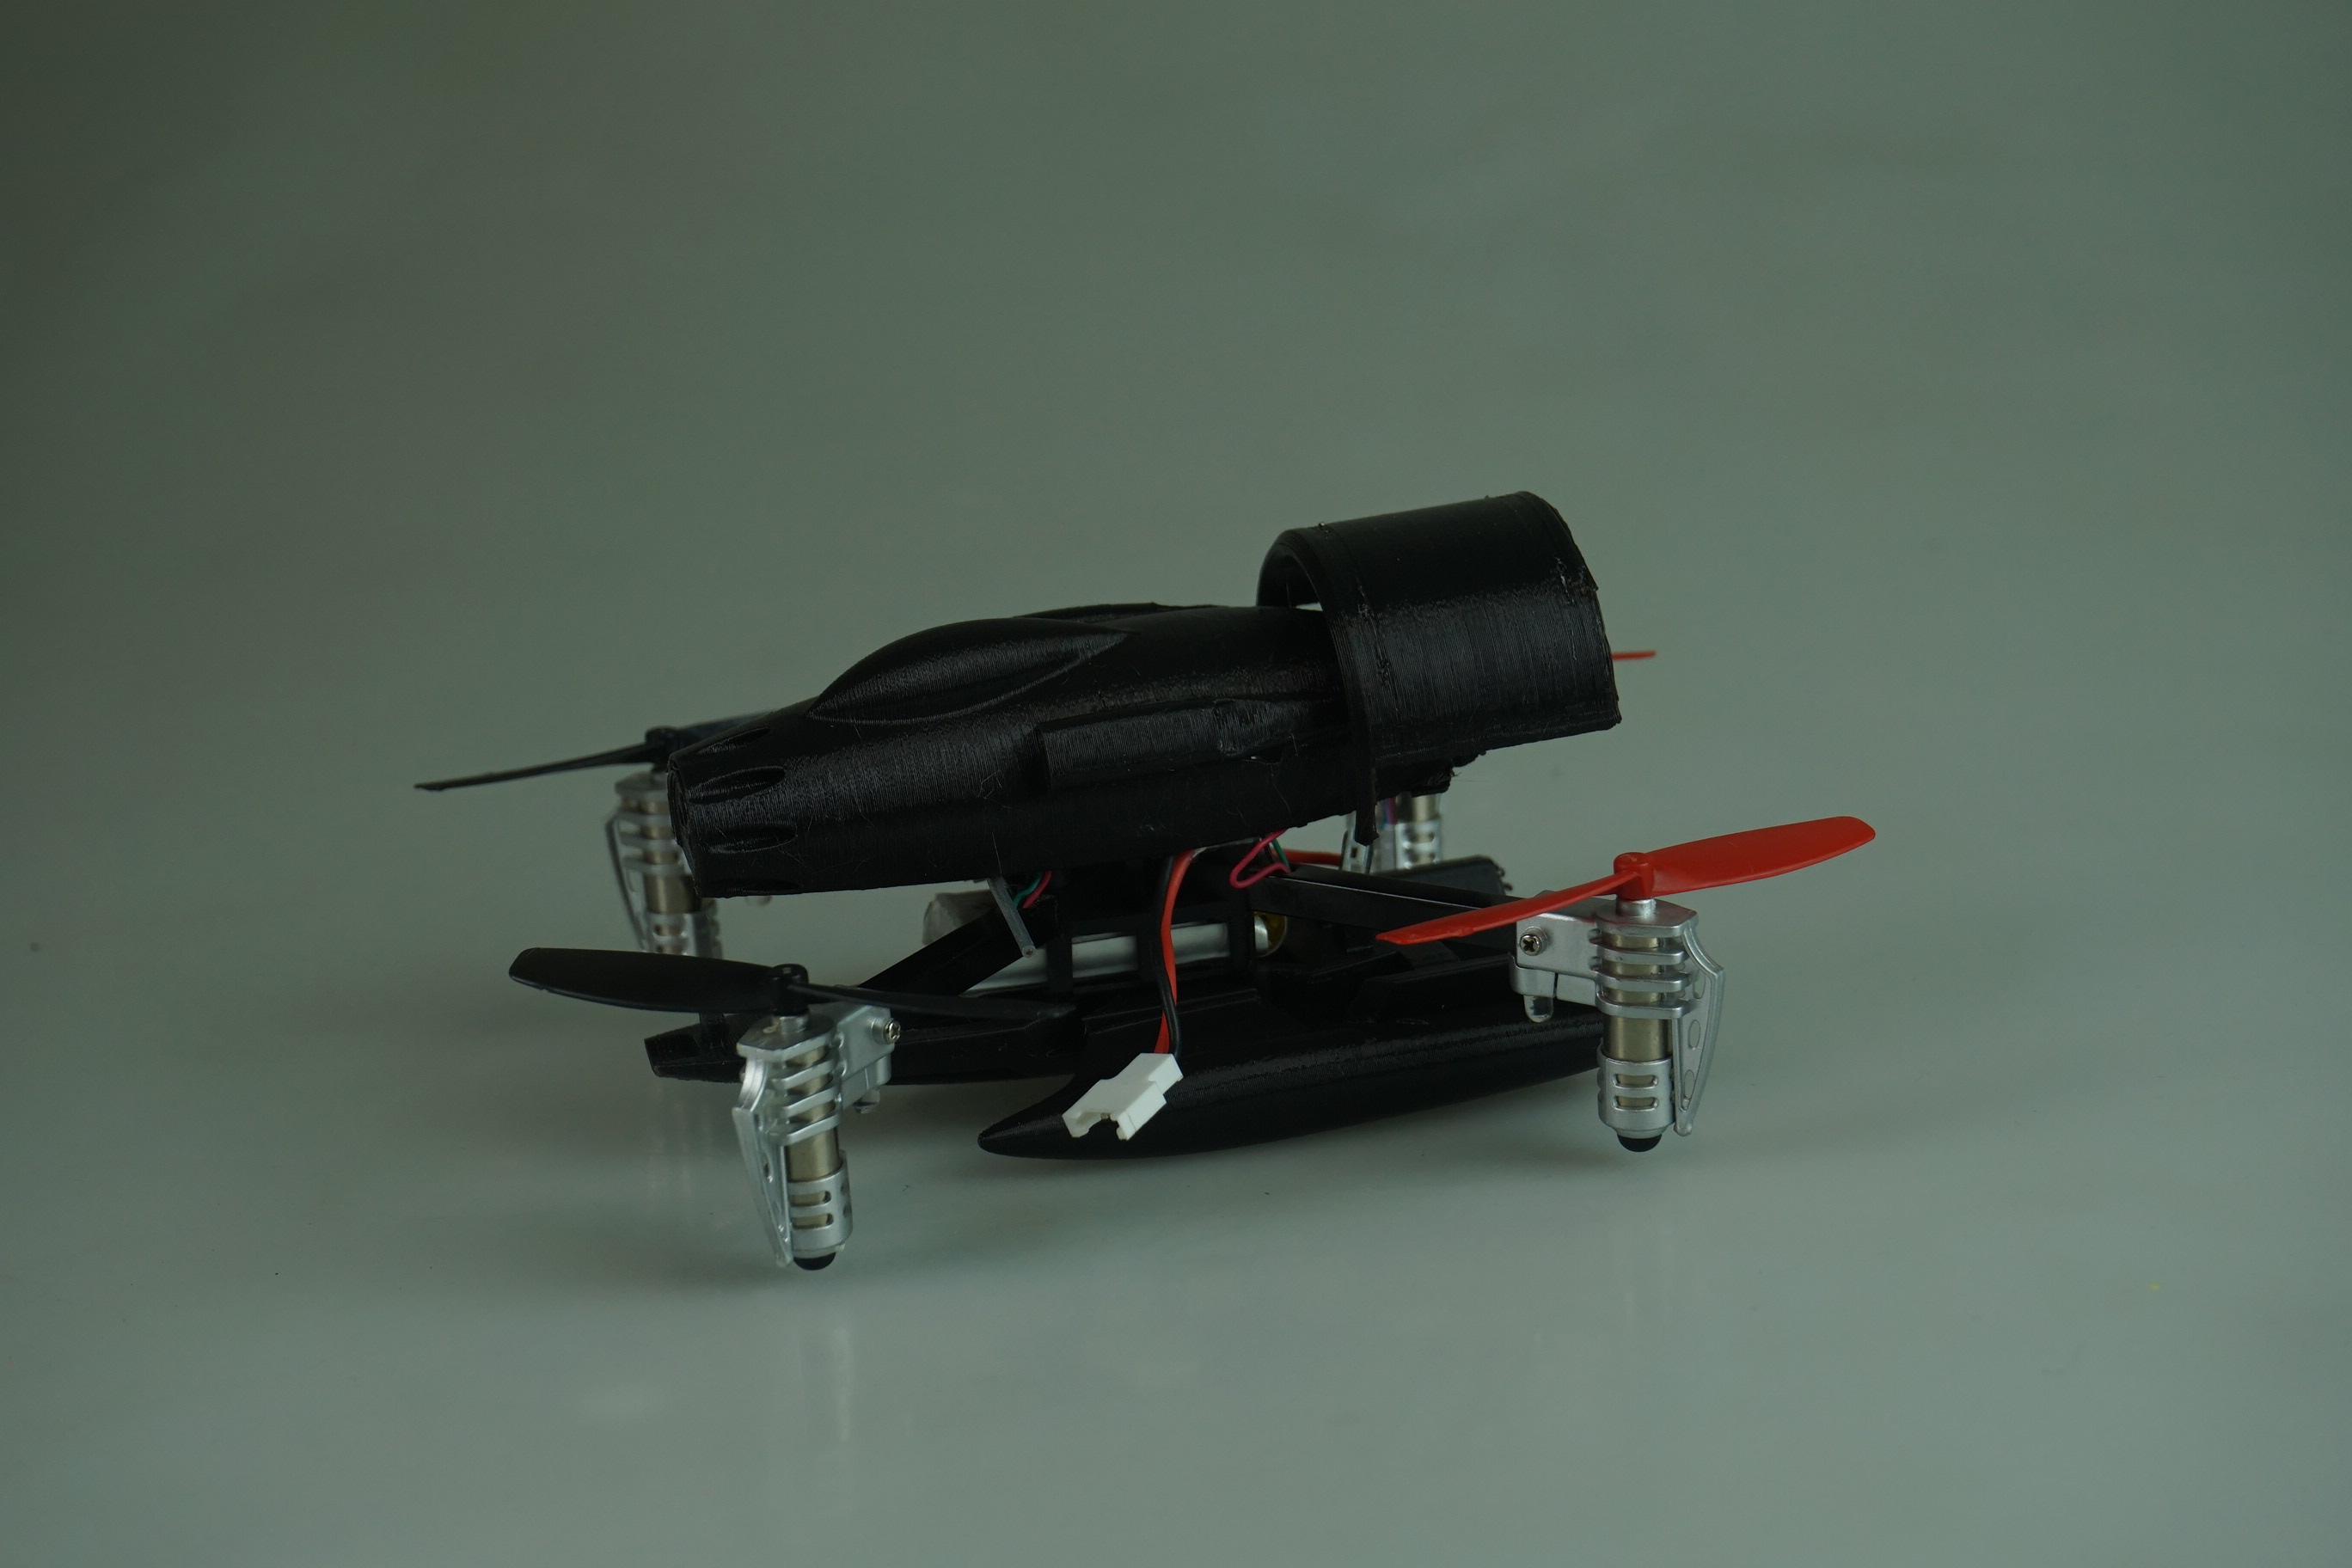 Racing Mini Drones